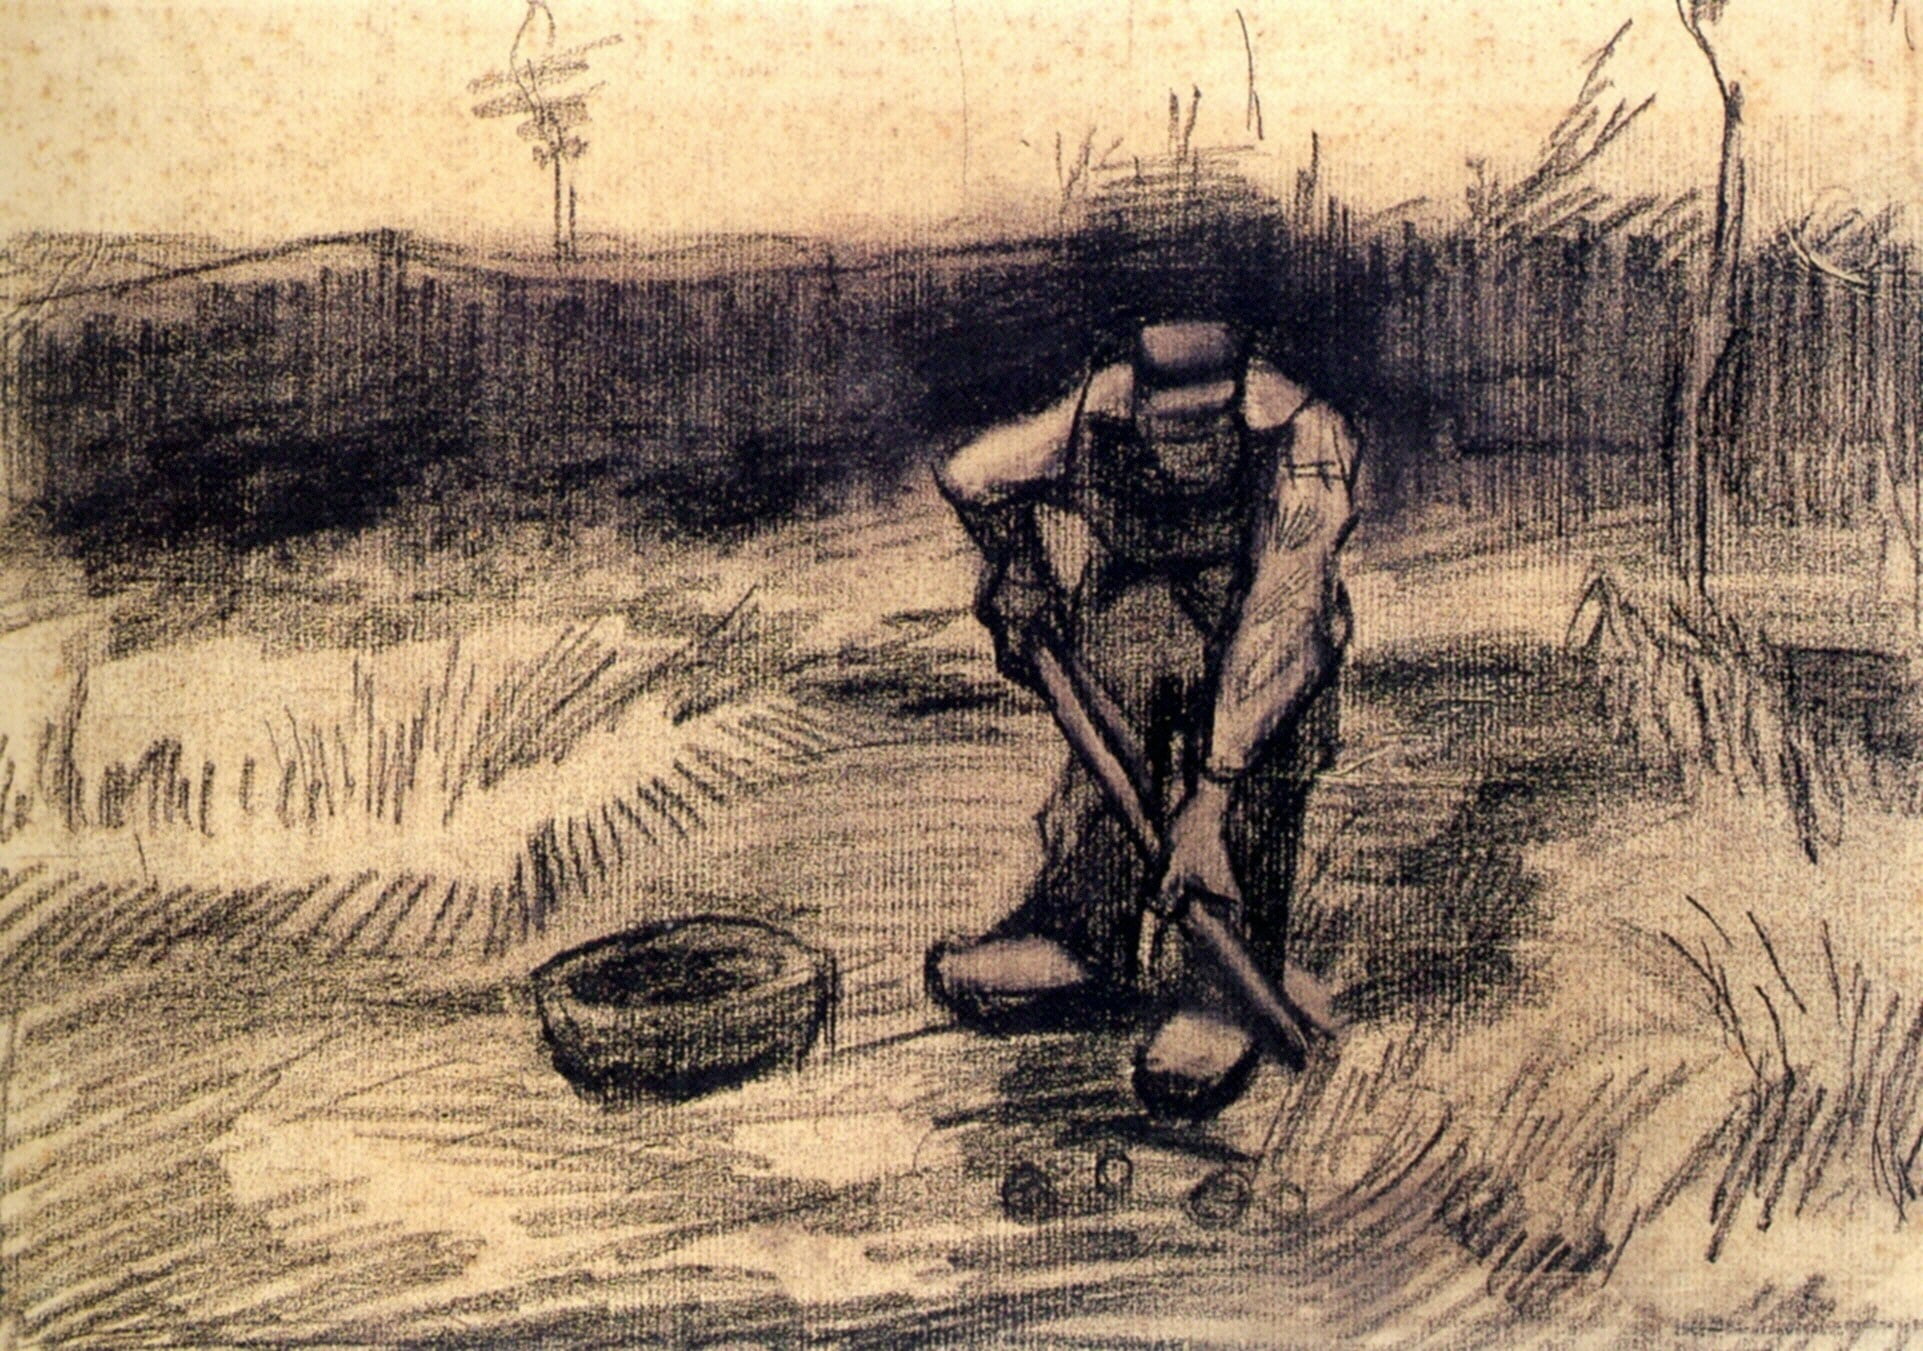 working, Vincent van Gogh, Peasant, Lifting Potatoes